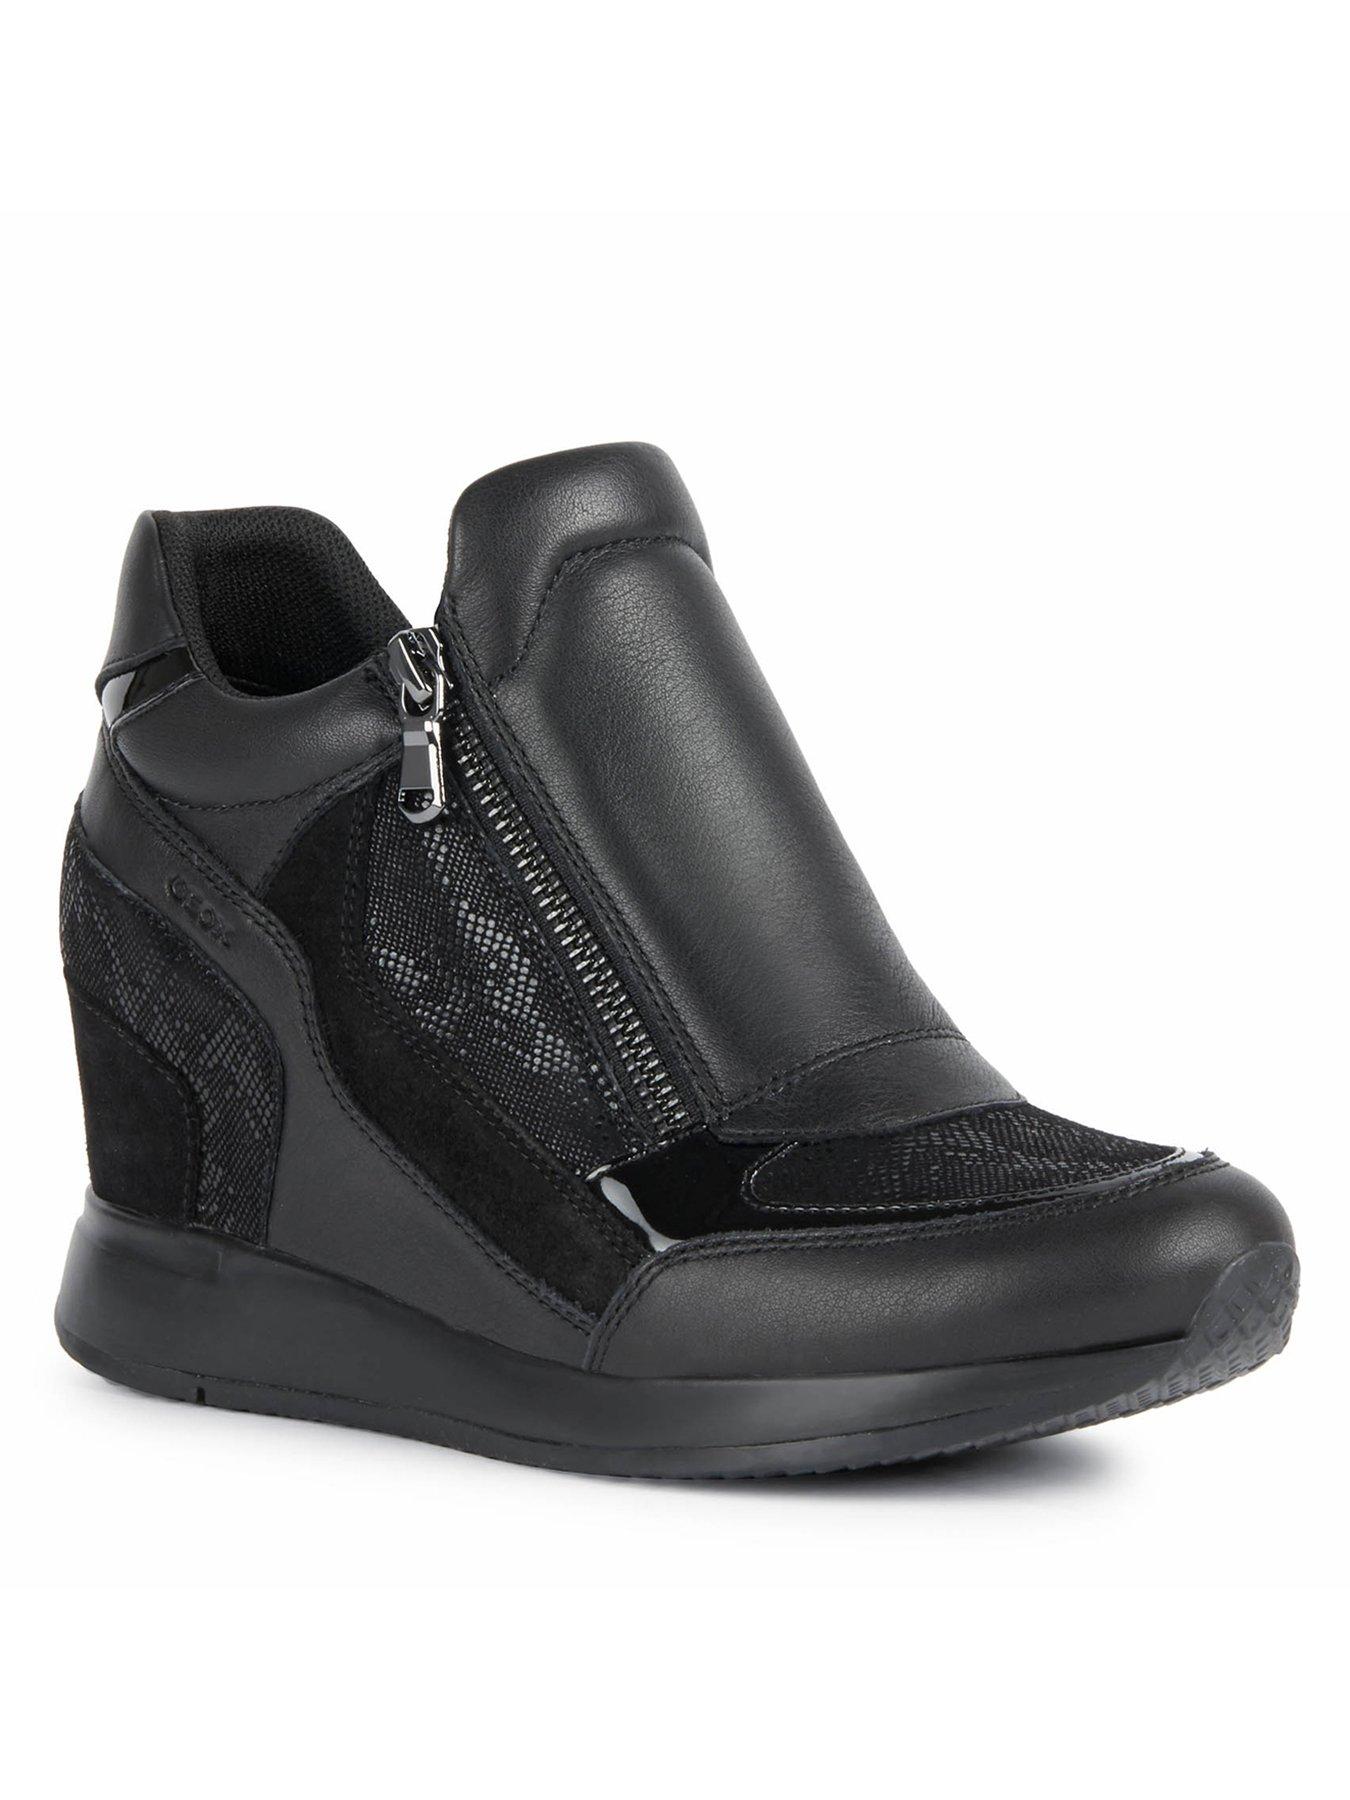 & | Geox | Flats | Shoes & boots | Women | www.very.co.uk